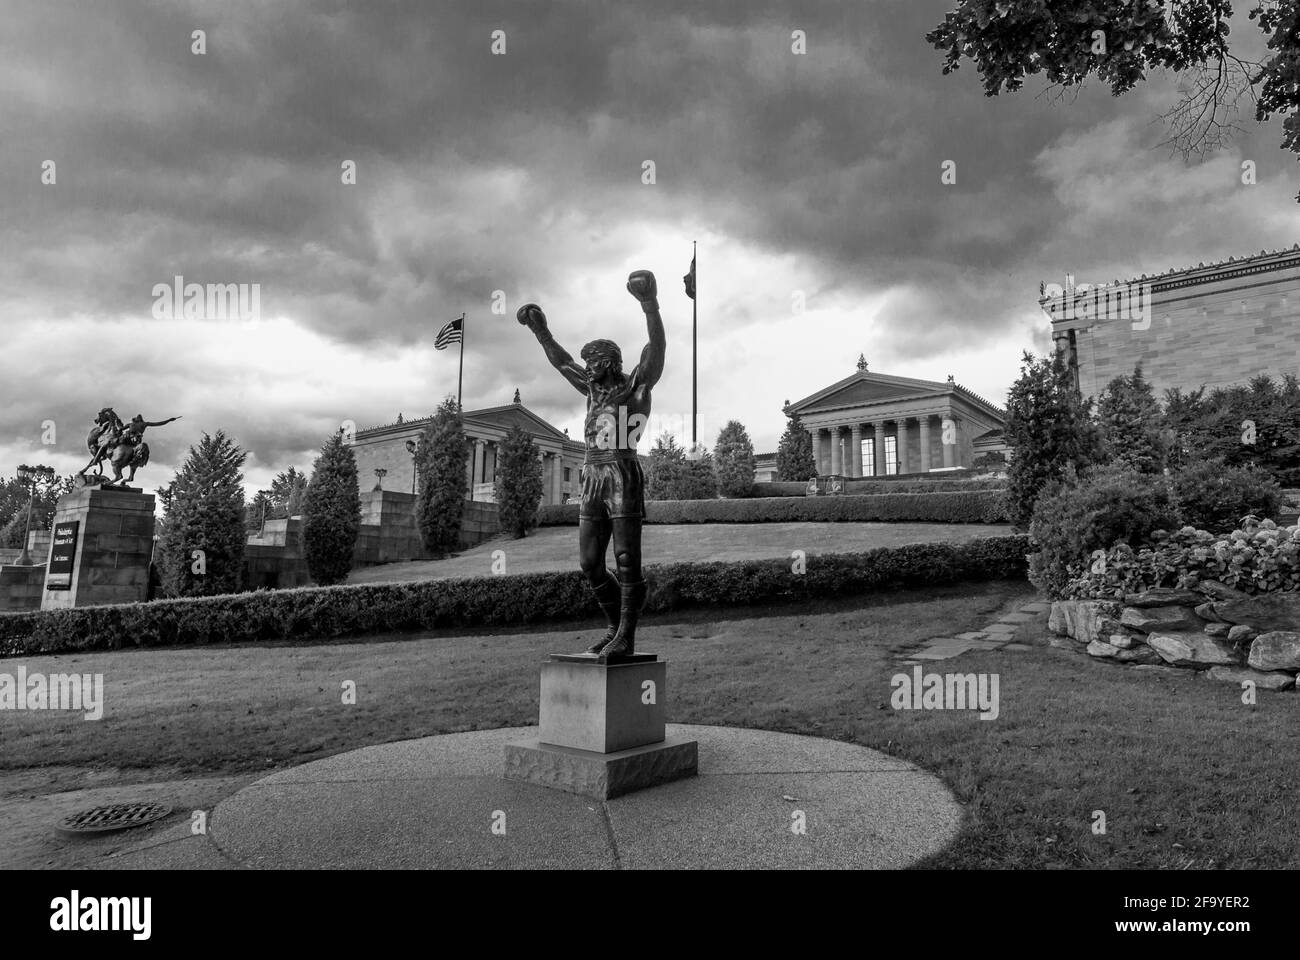 The statue of Sylvester Stallone / Rocky Balboa near Philadelphia Museum of Art, USA. B&W Stock Photo